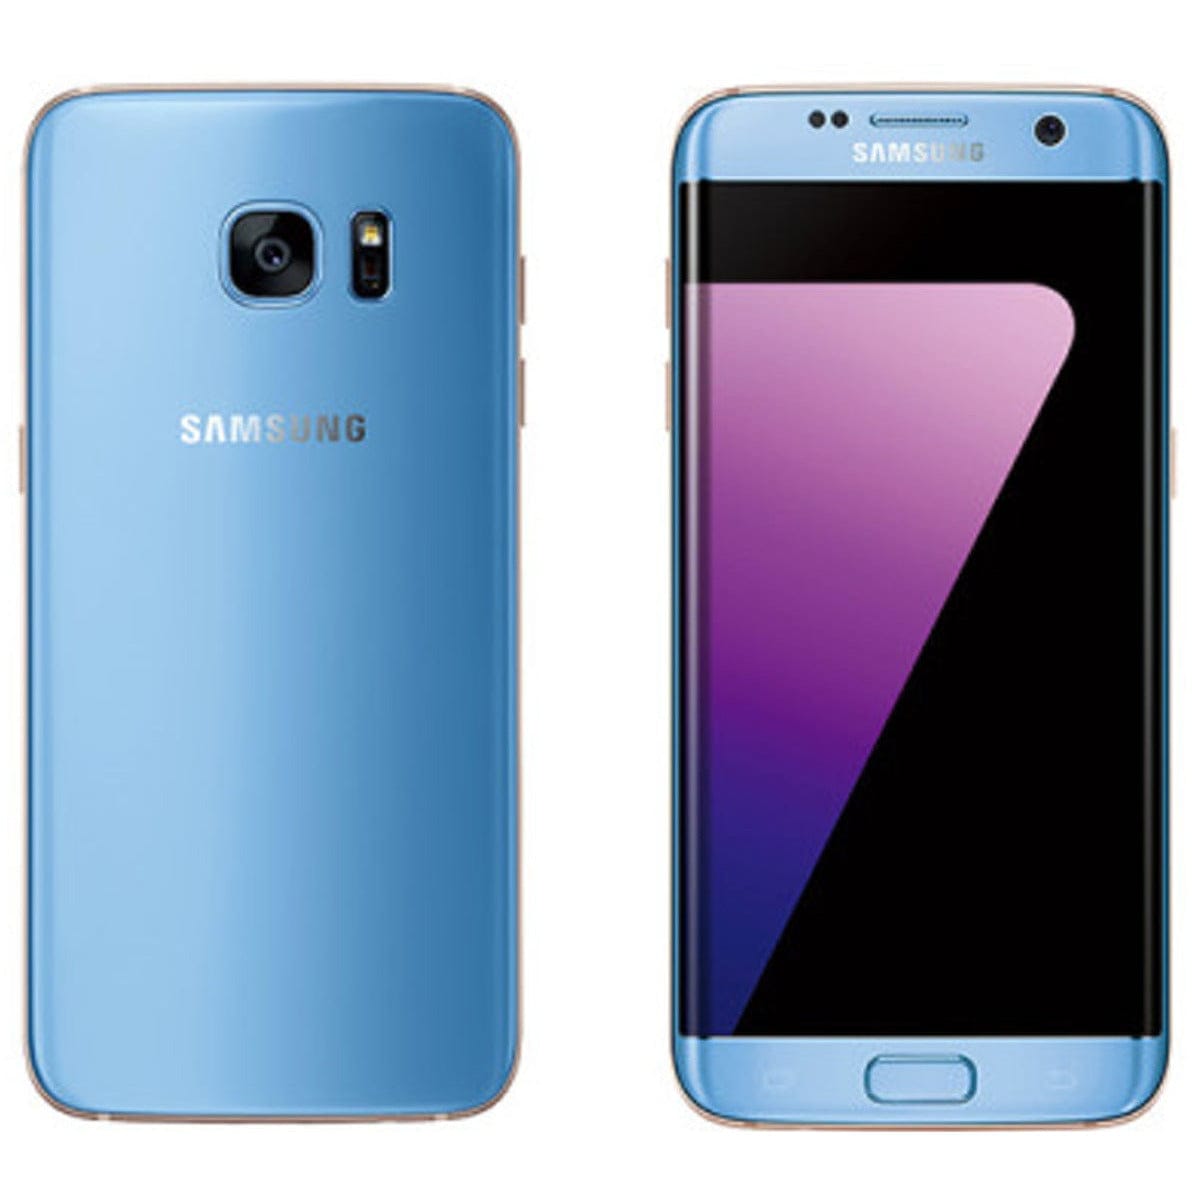 Samsung Galaxy S7 edge - 32 GB - Blue Coral - AT&T - GSM